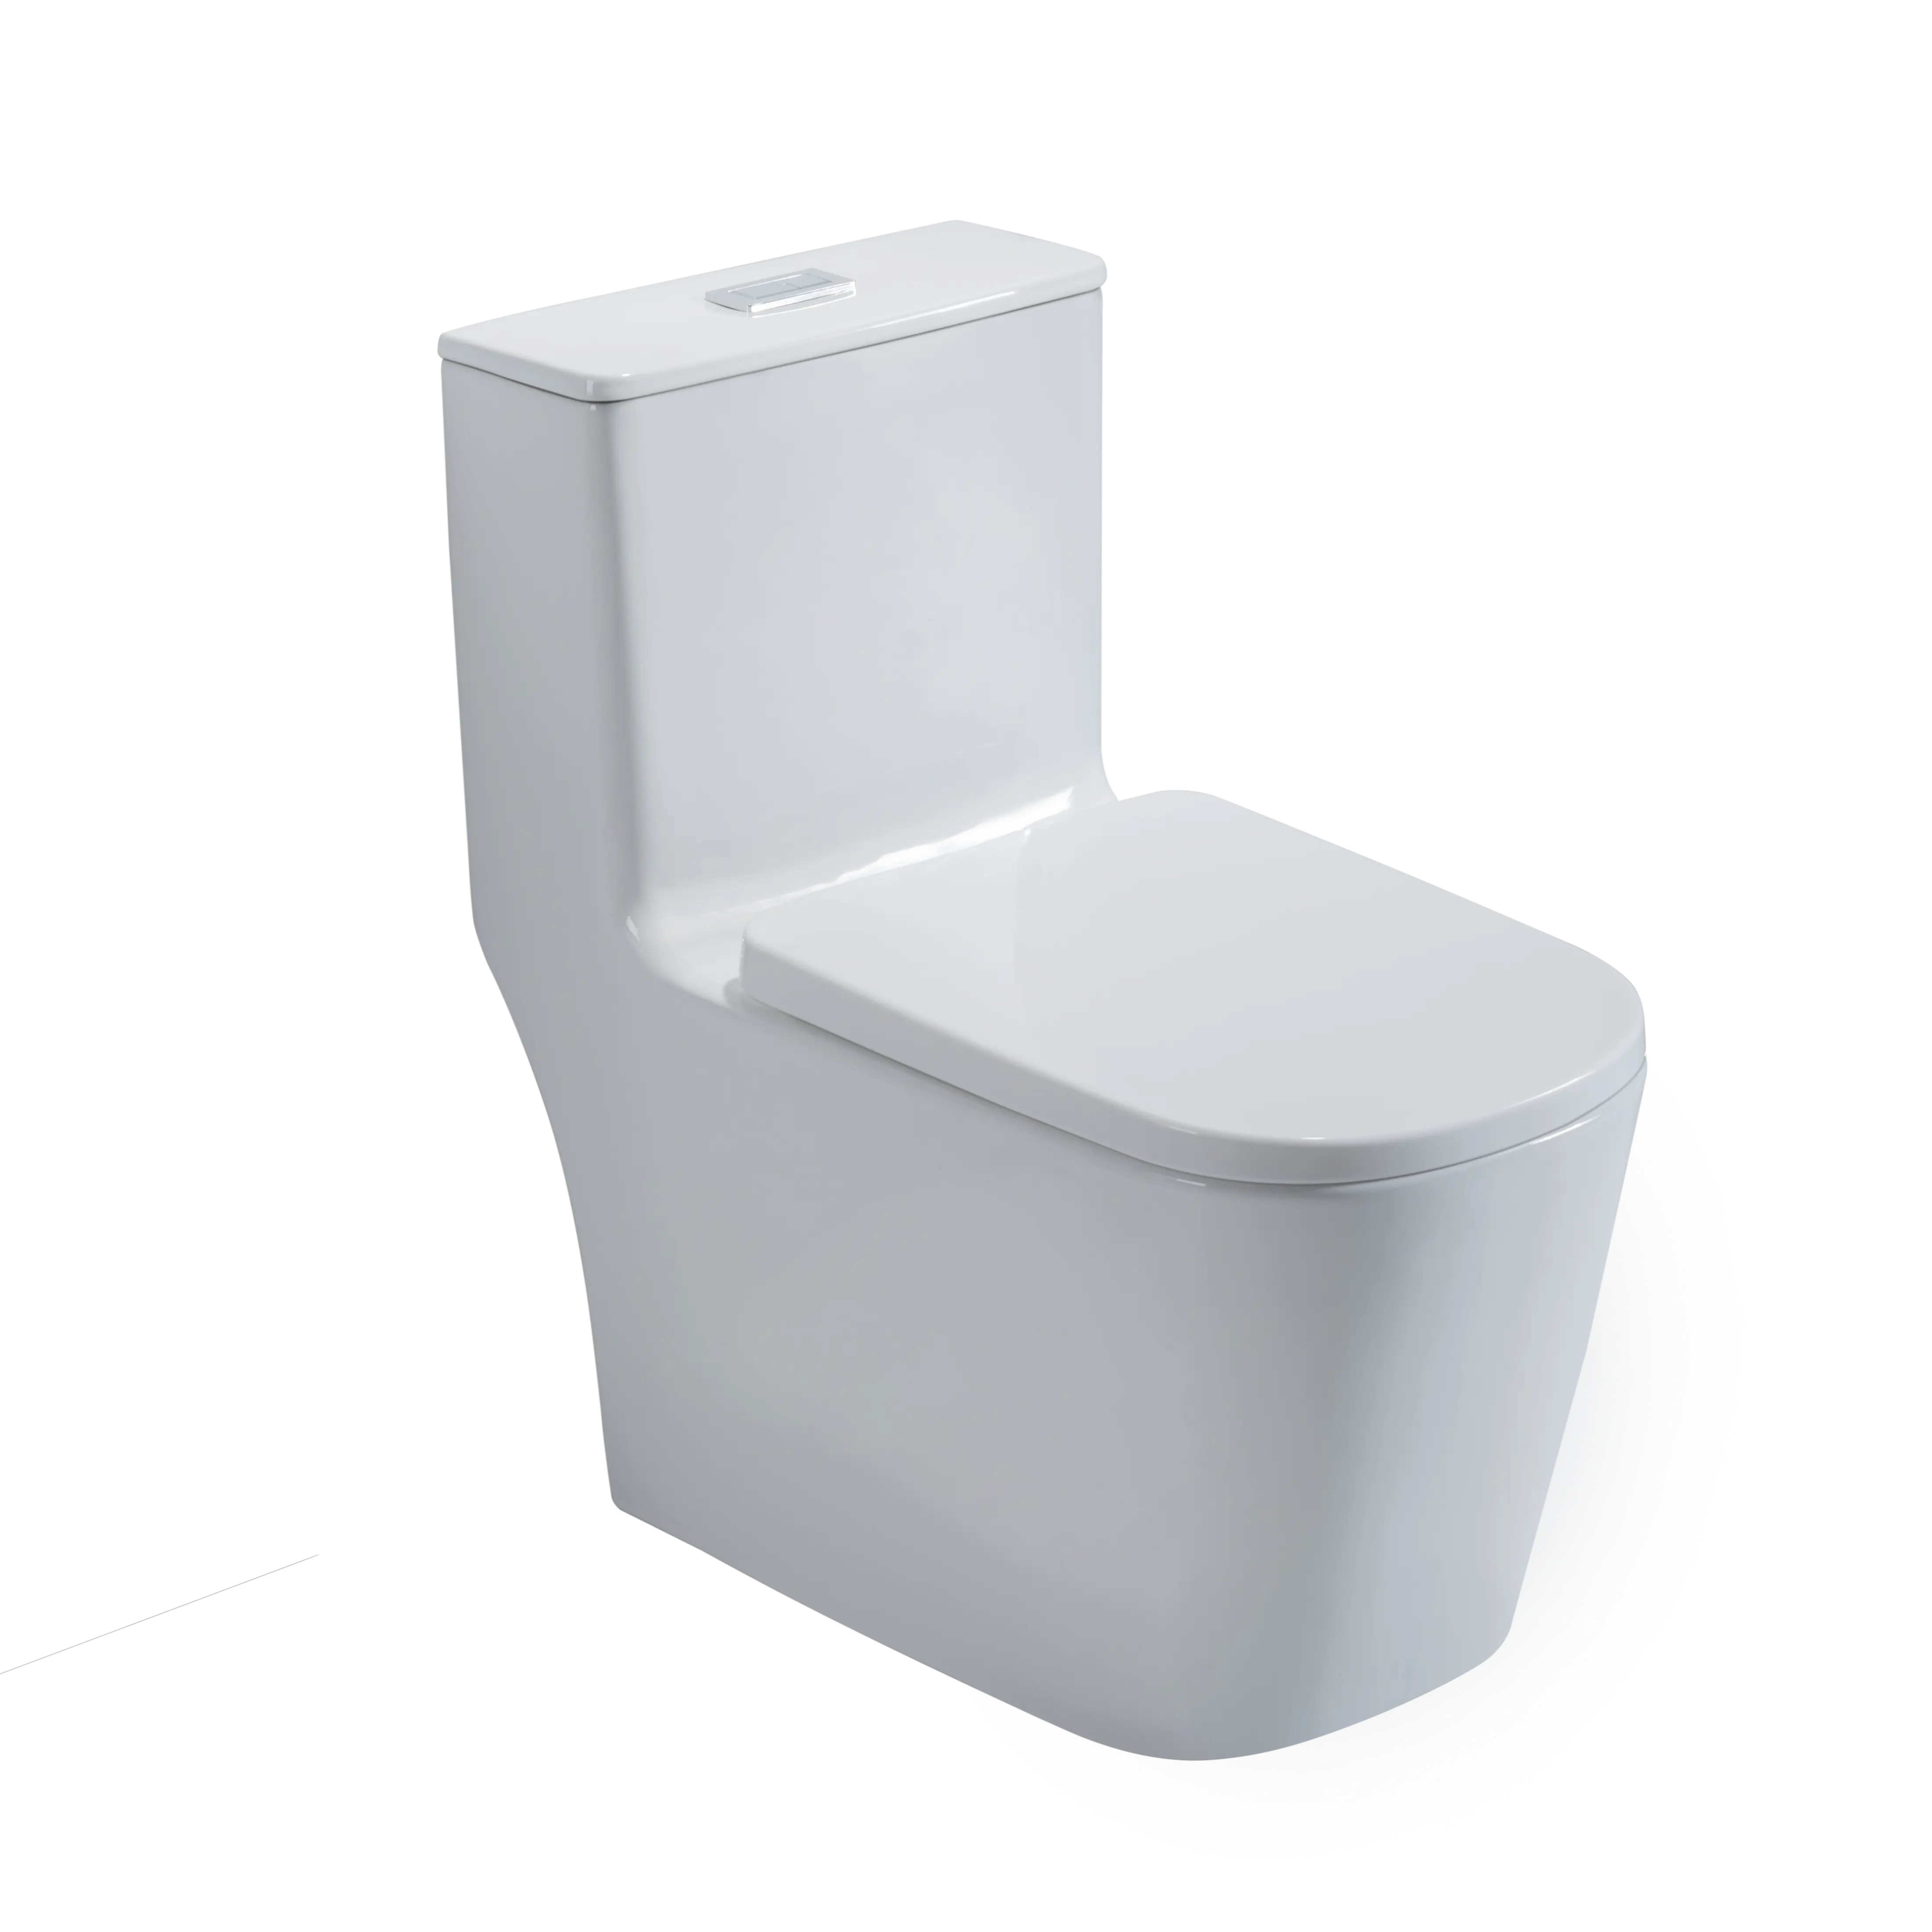 Tangdao toilettes en céramique salle de bains articles sanitaires en céramique toilette monobloc